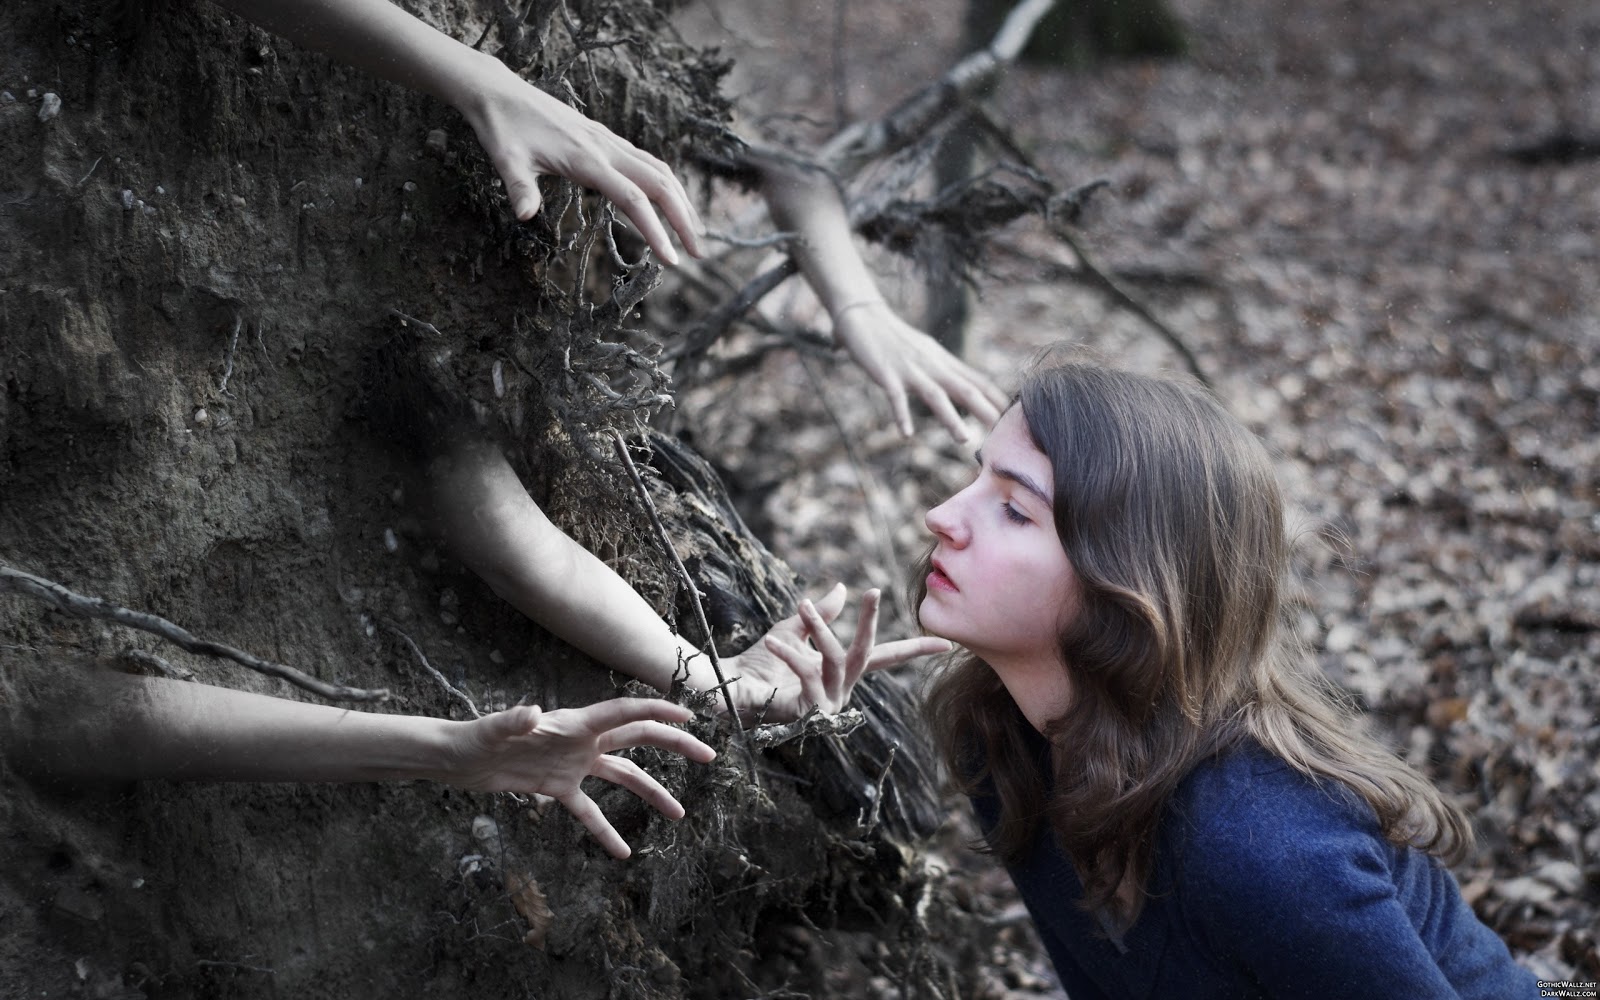  Graveyard hands grab pretty girl | Dark Gothic Wallpaper Download